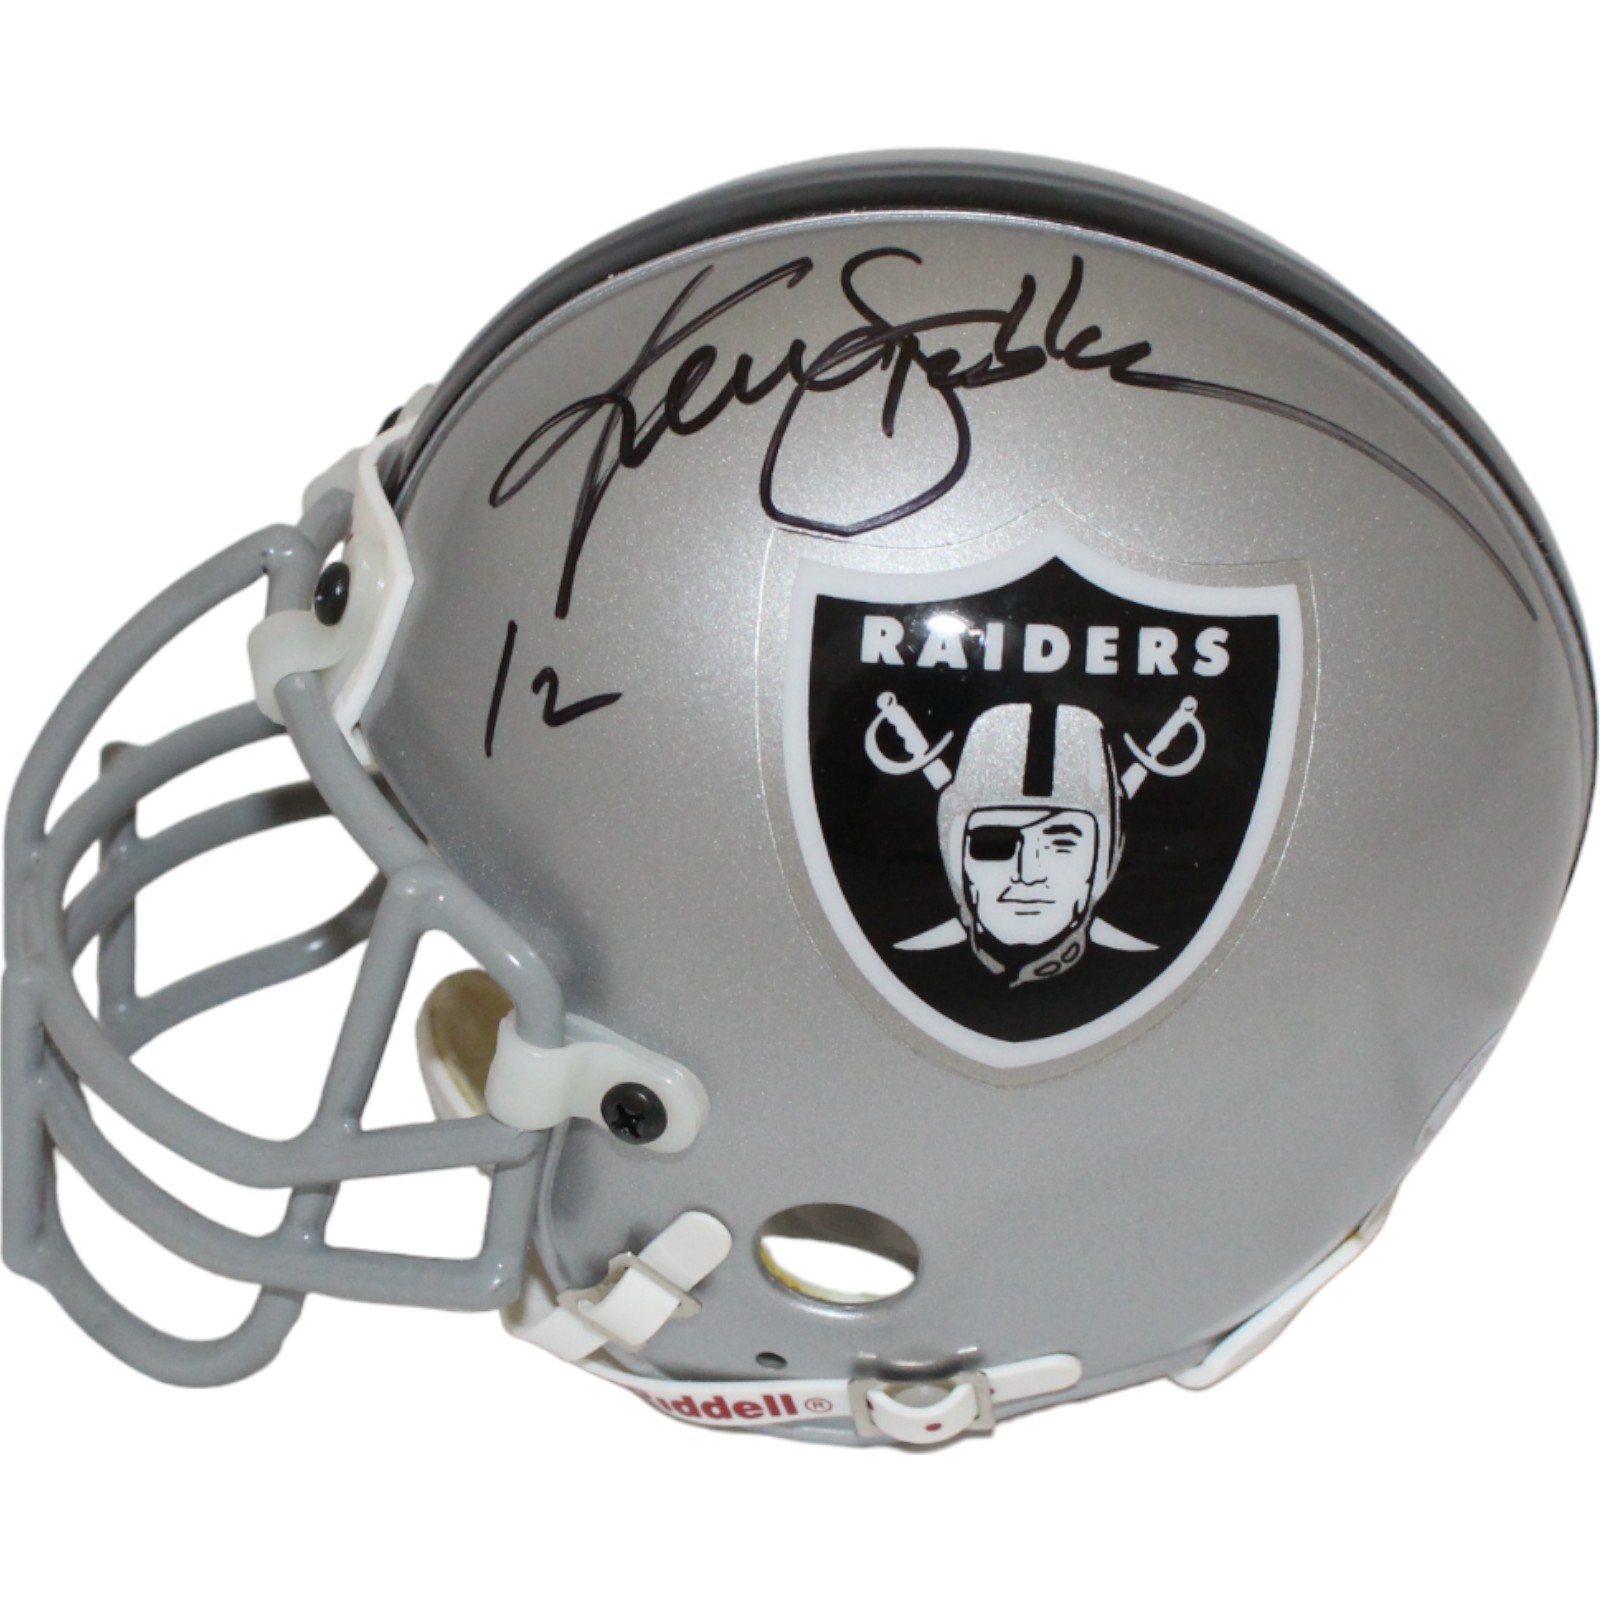 Ken Stabler Signed Oakland Raiders VSR4 Authentic mini Helmet Beckett 44149